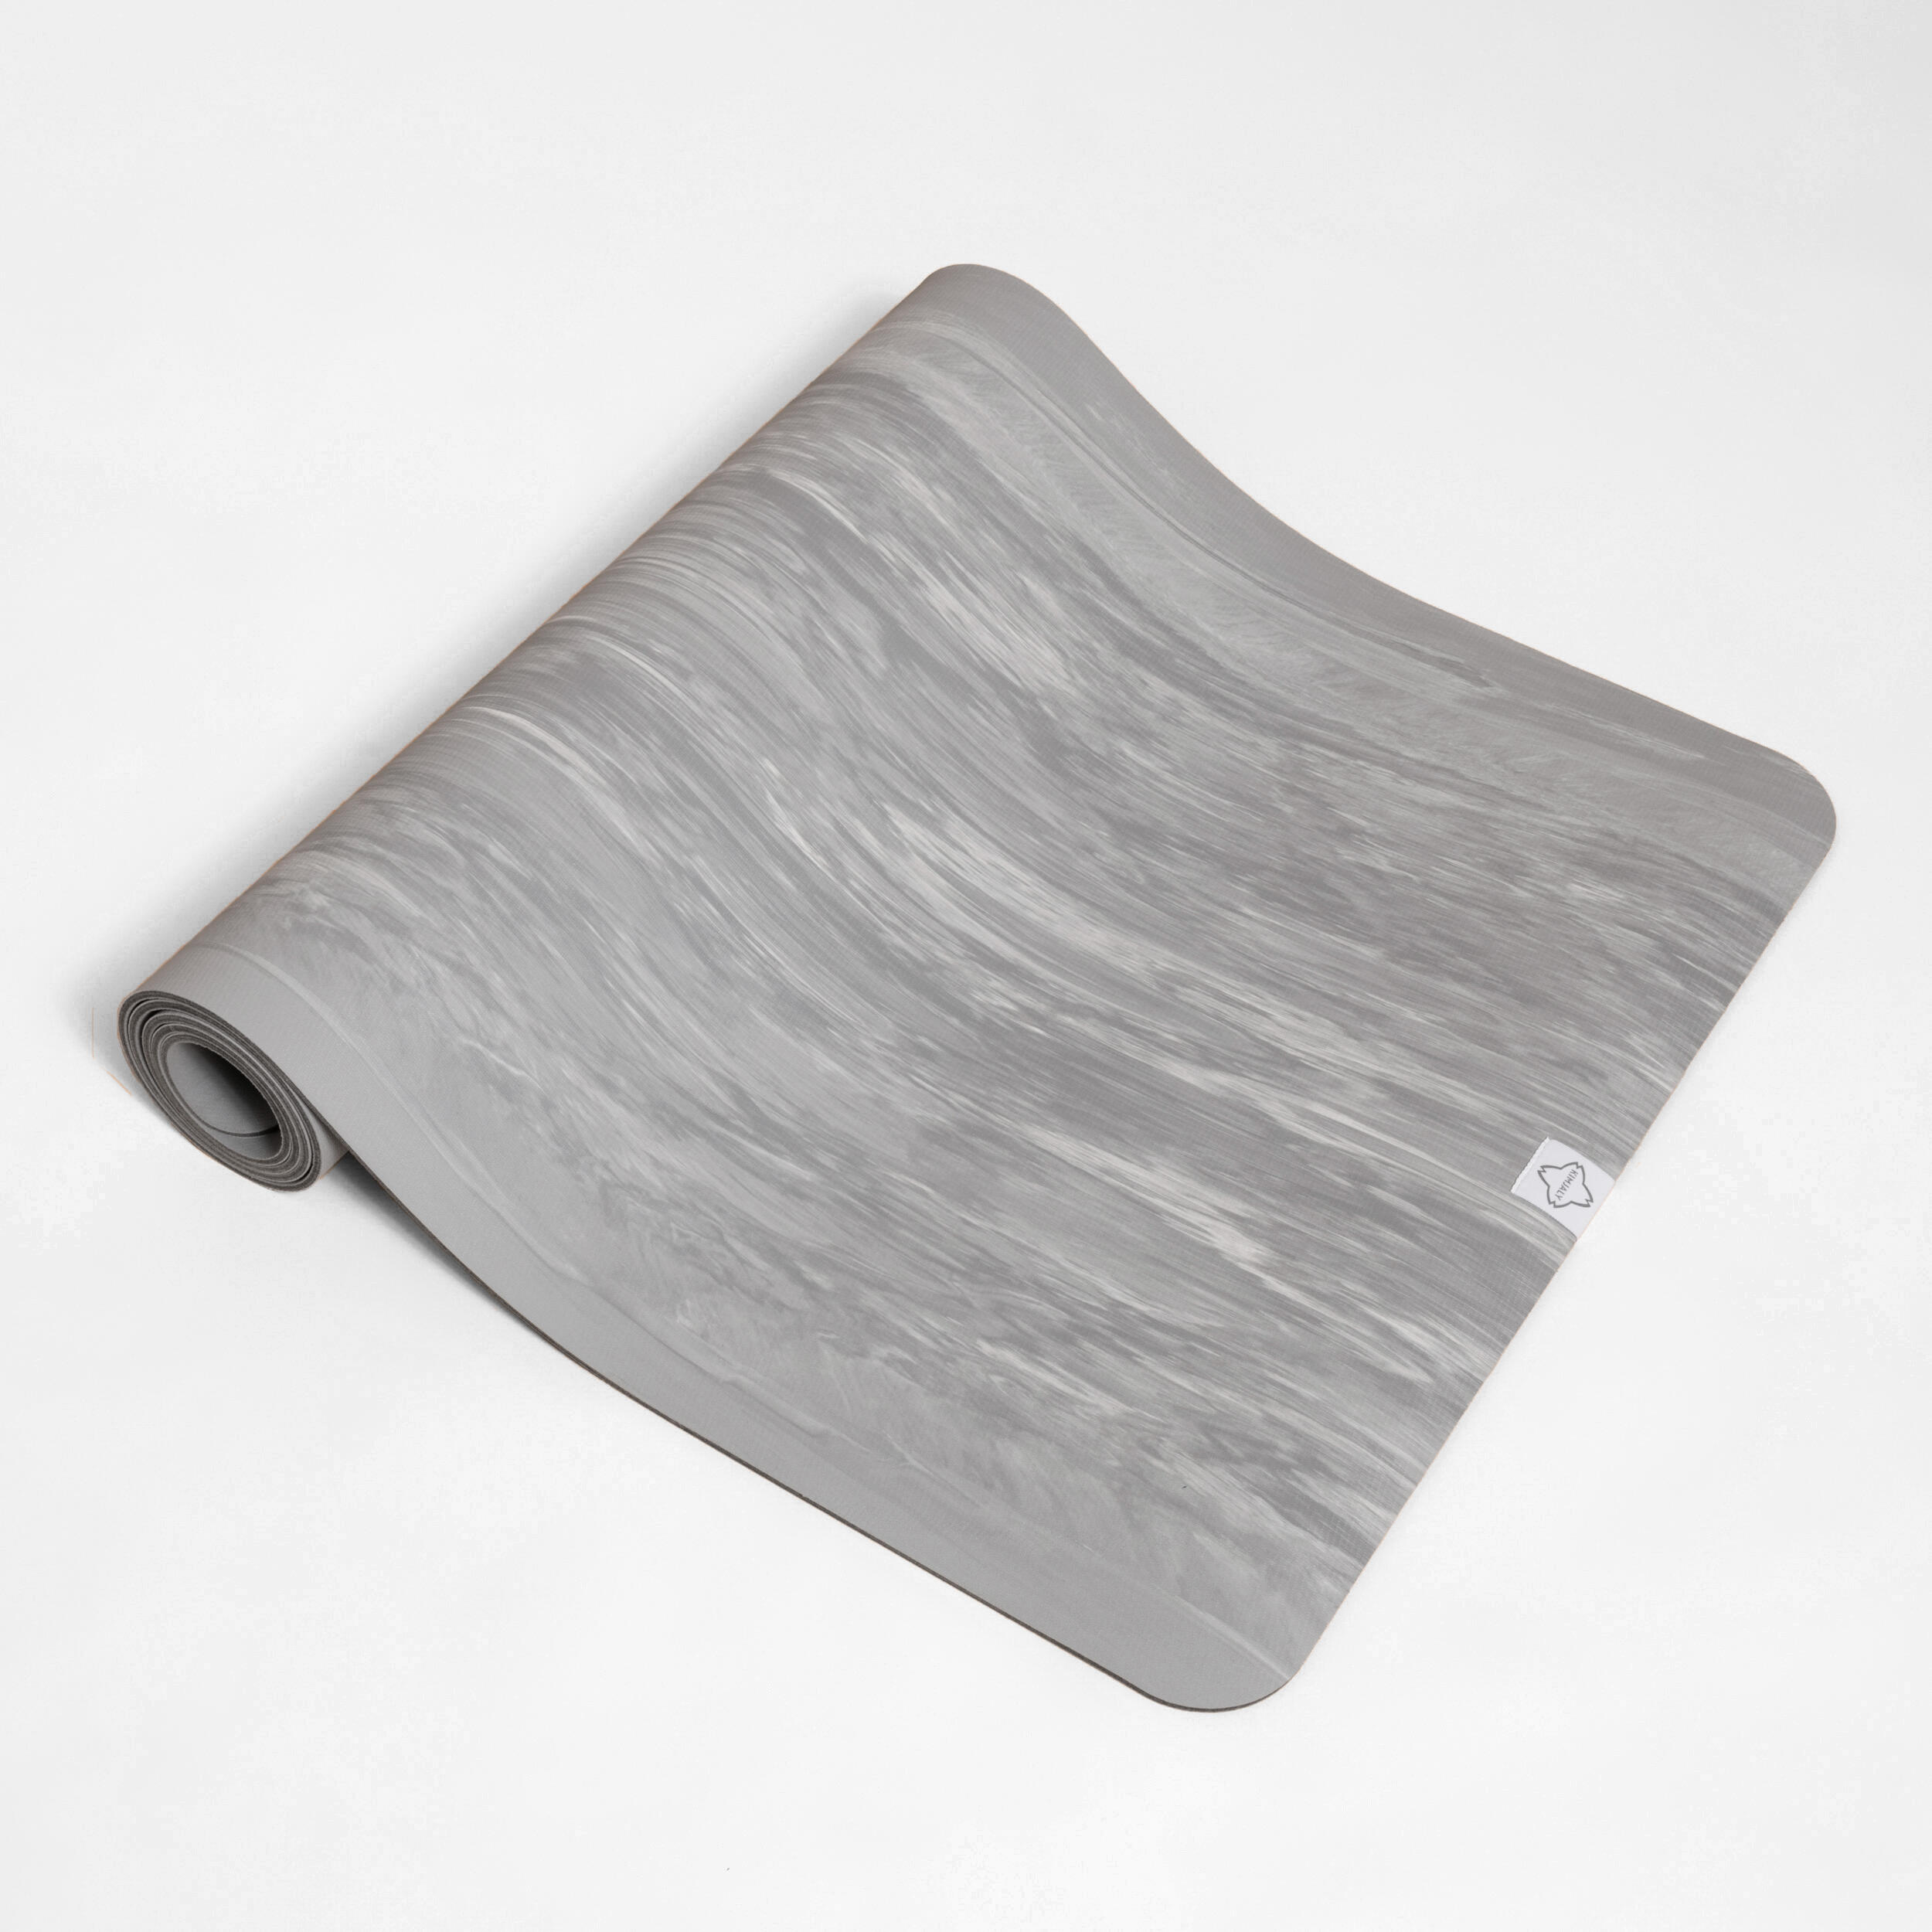 185 x 65 cm x 5 mm Yoga Mat Grip - Grey 2/5